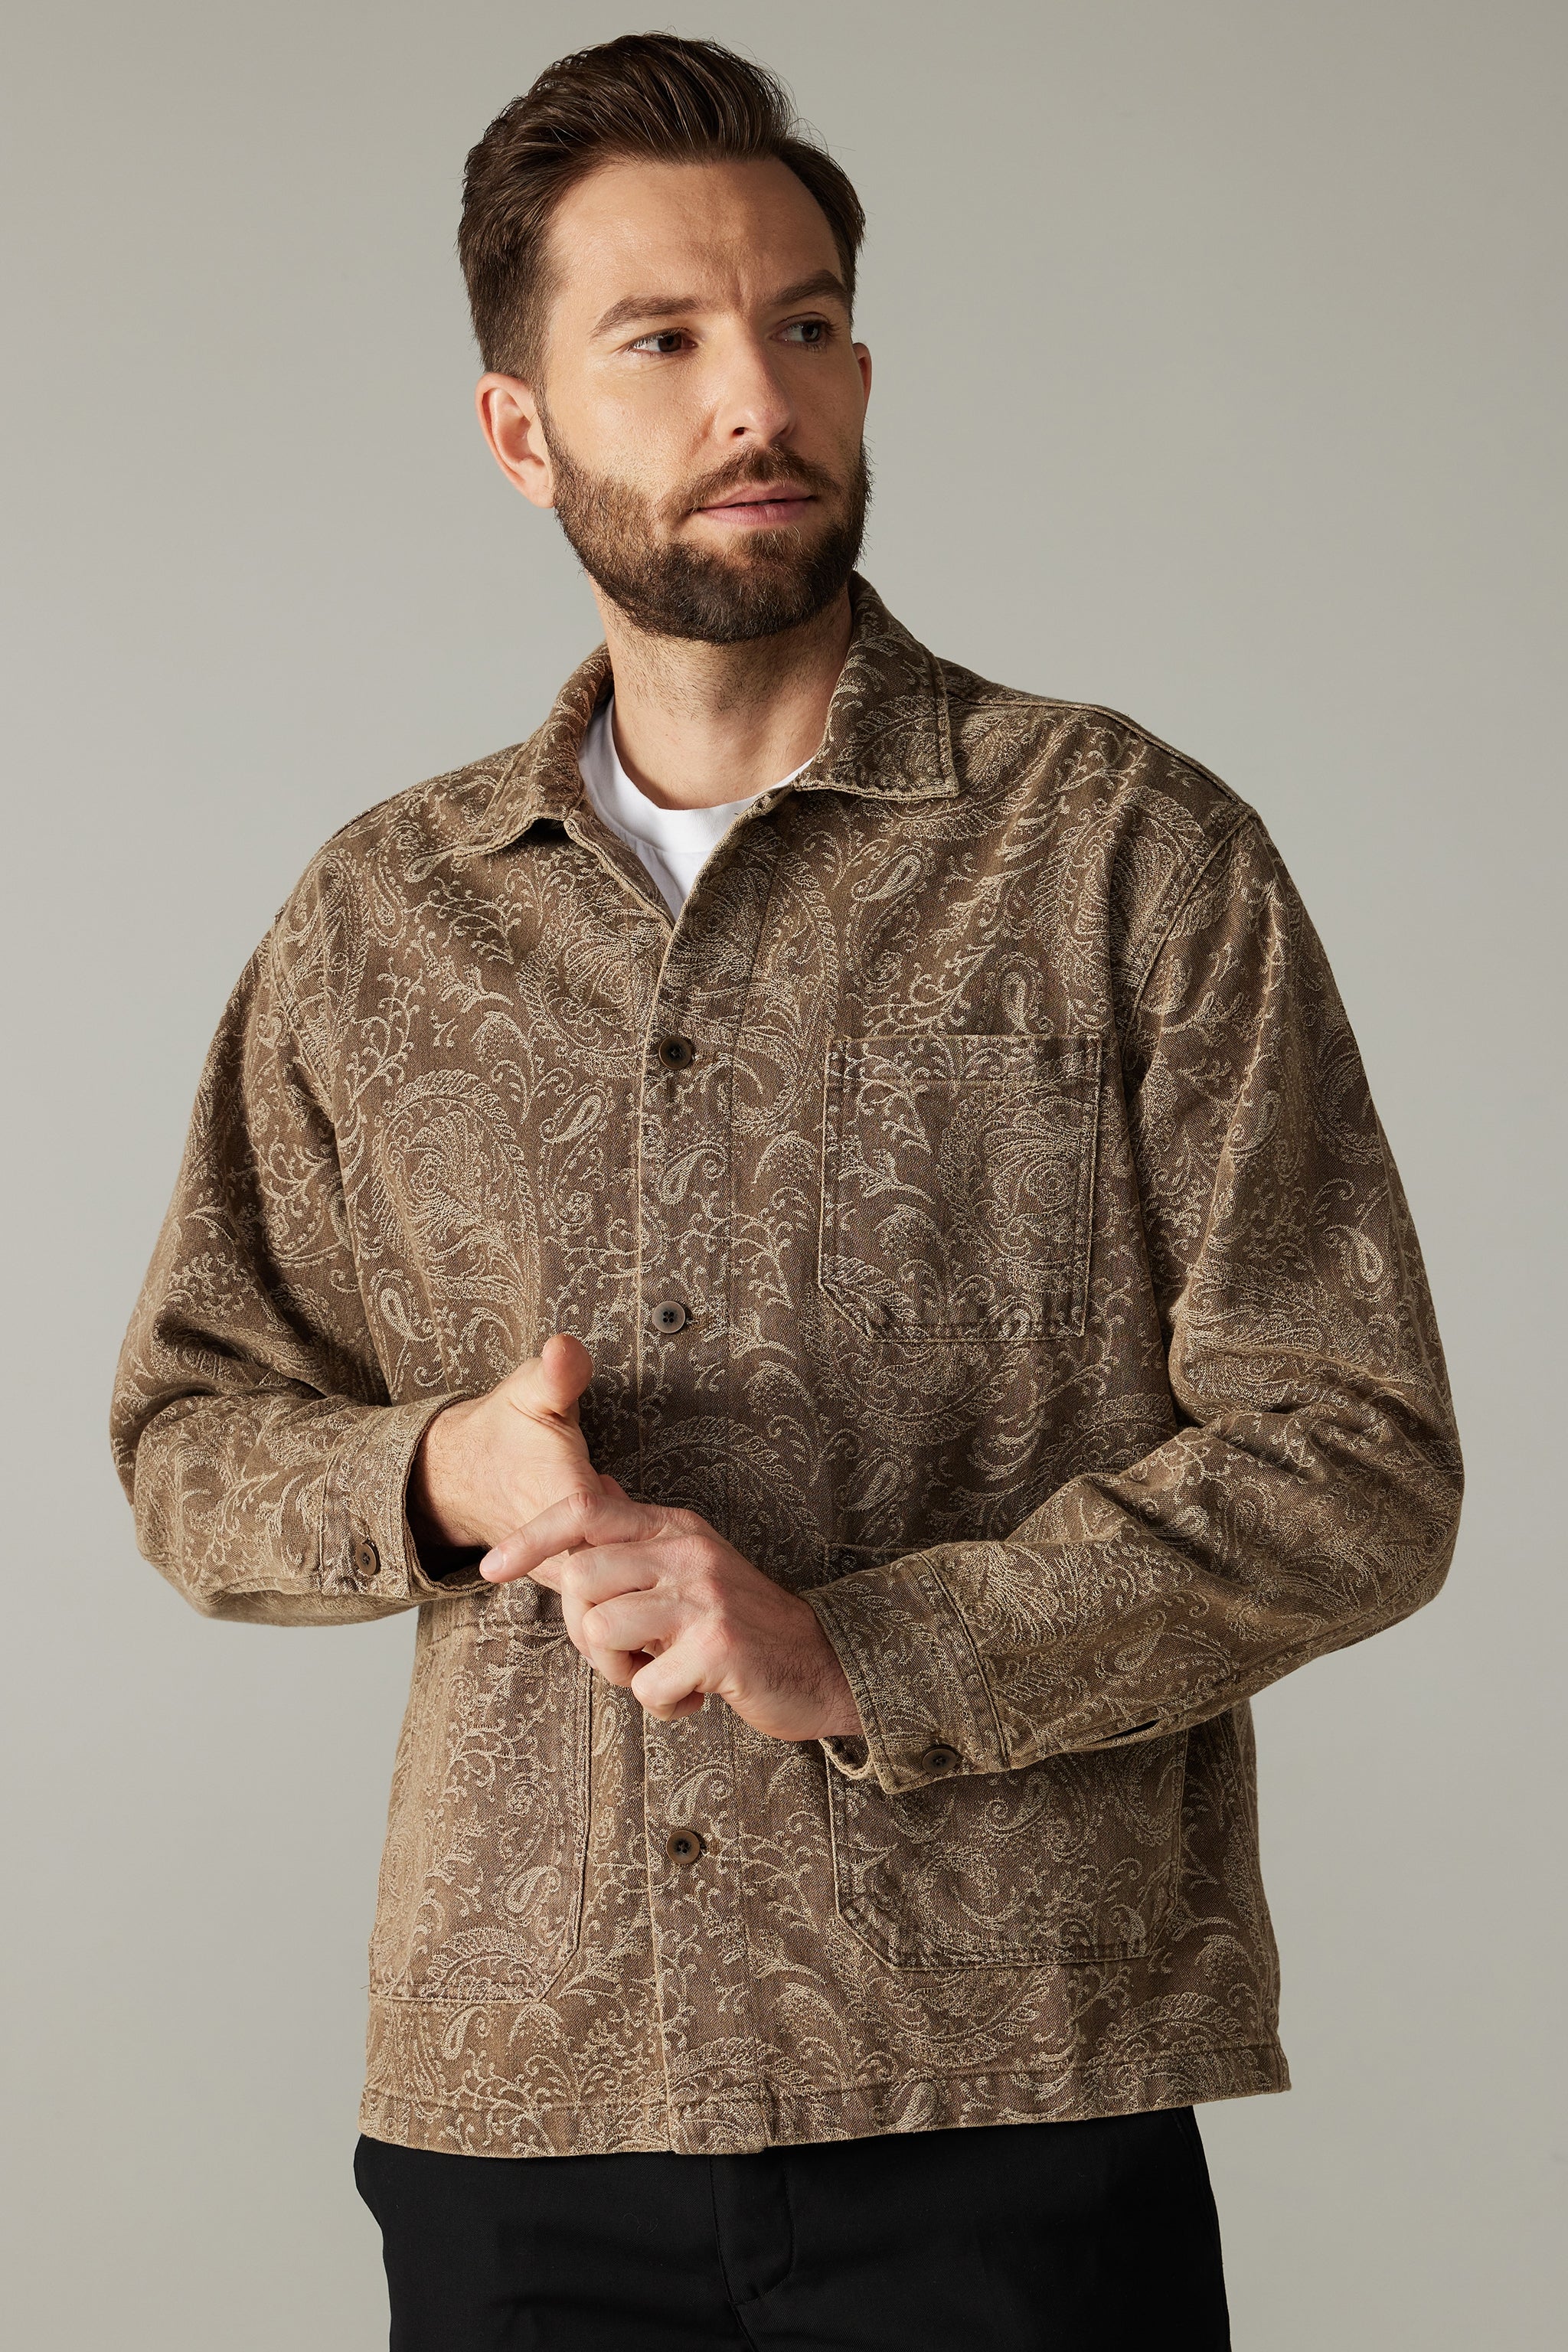 a man with a beard wearing a jacket